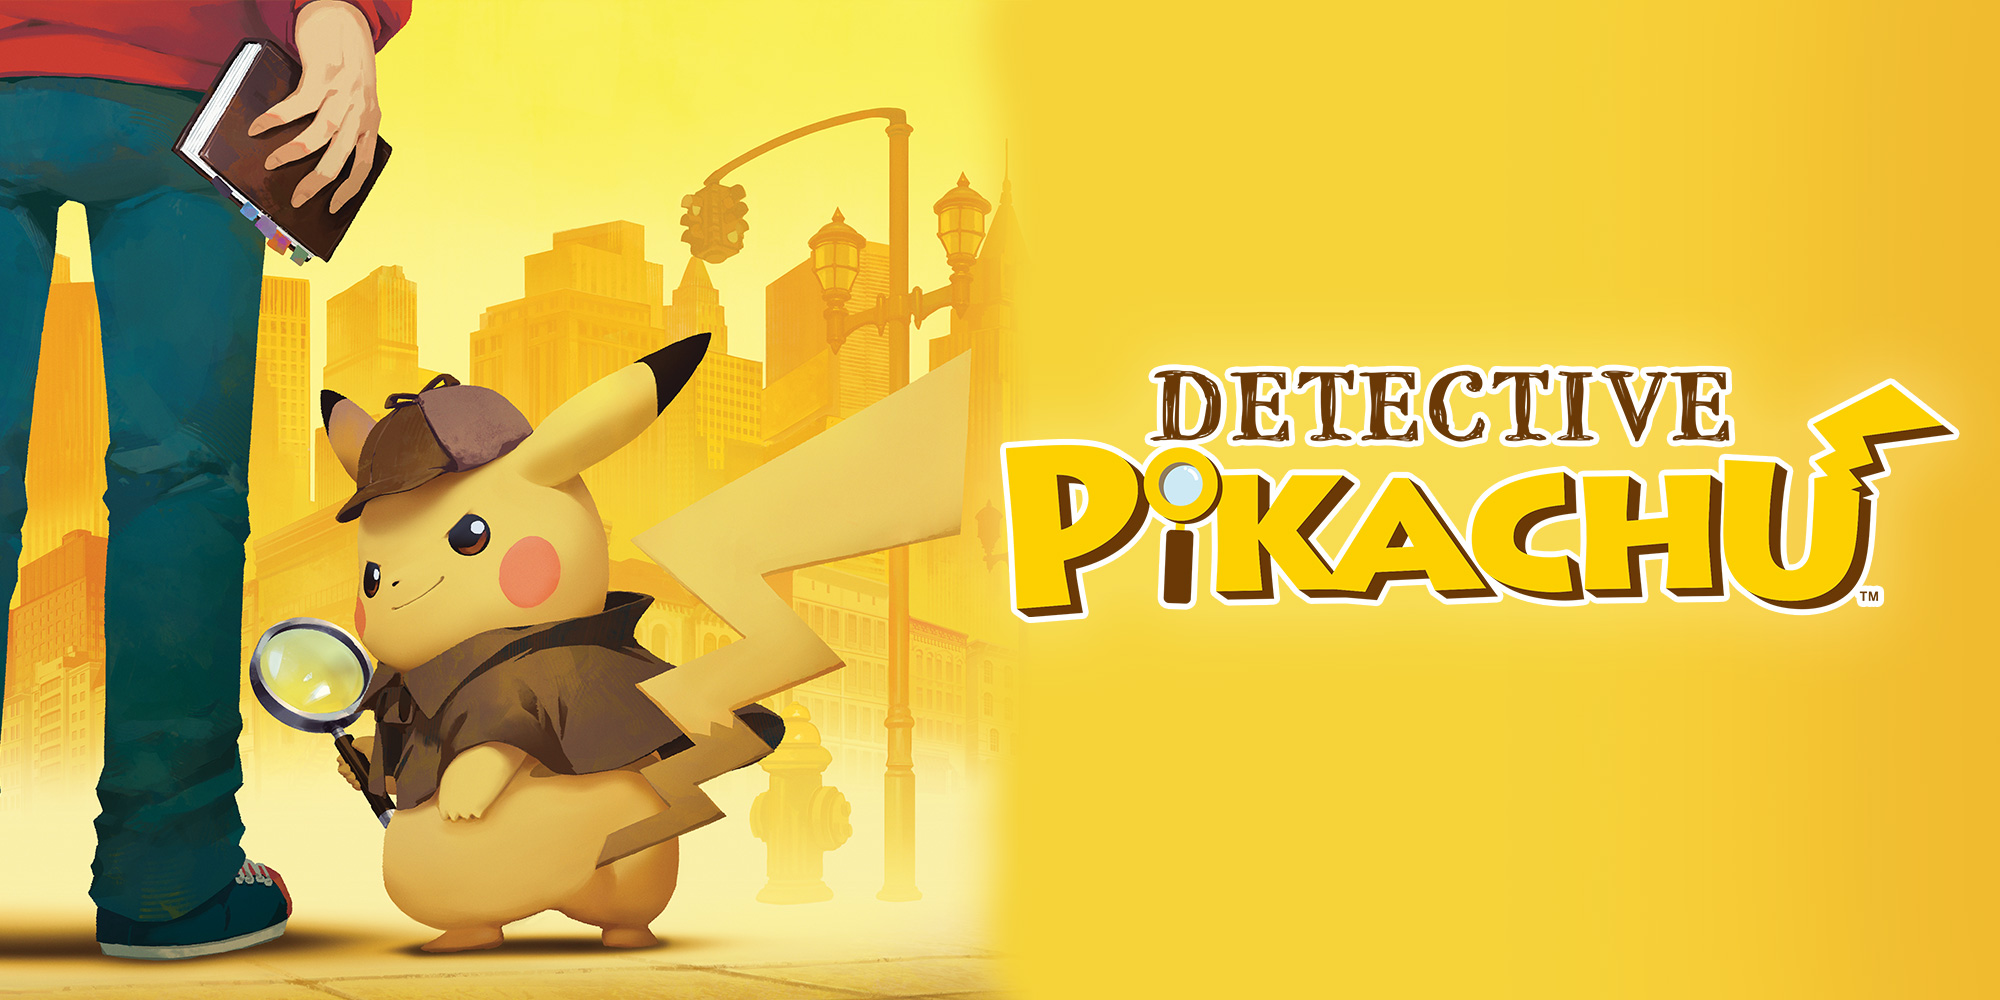 High Definition Detective Pikachu wallpaper